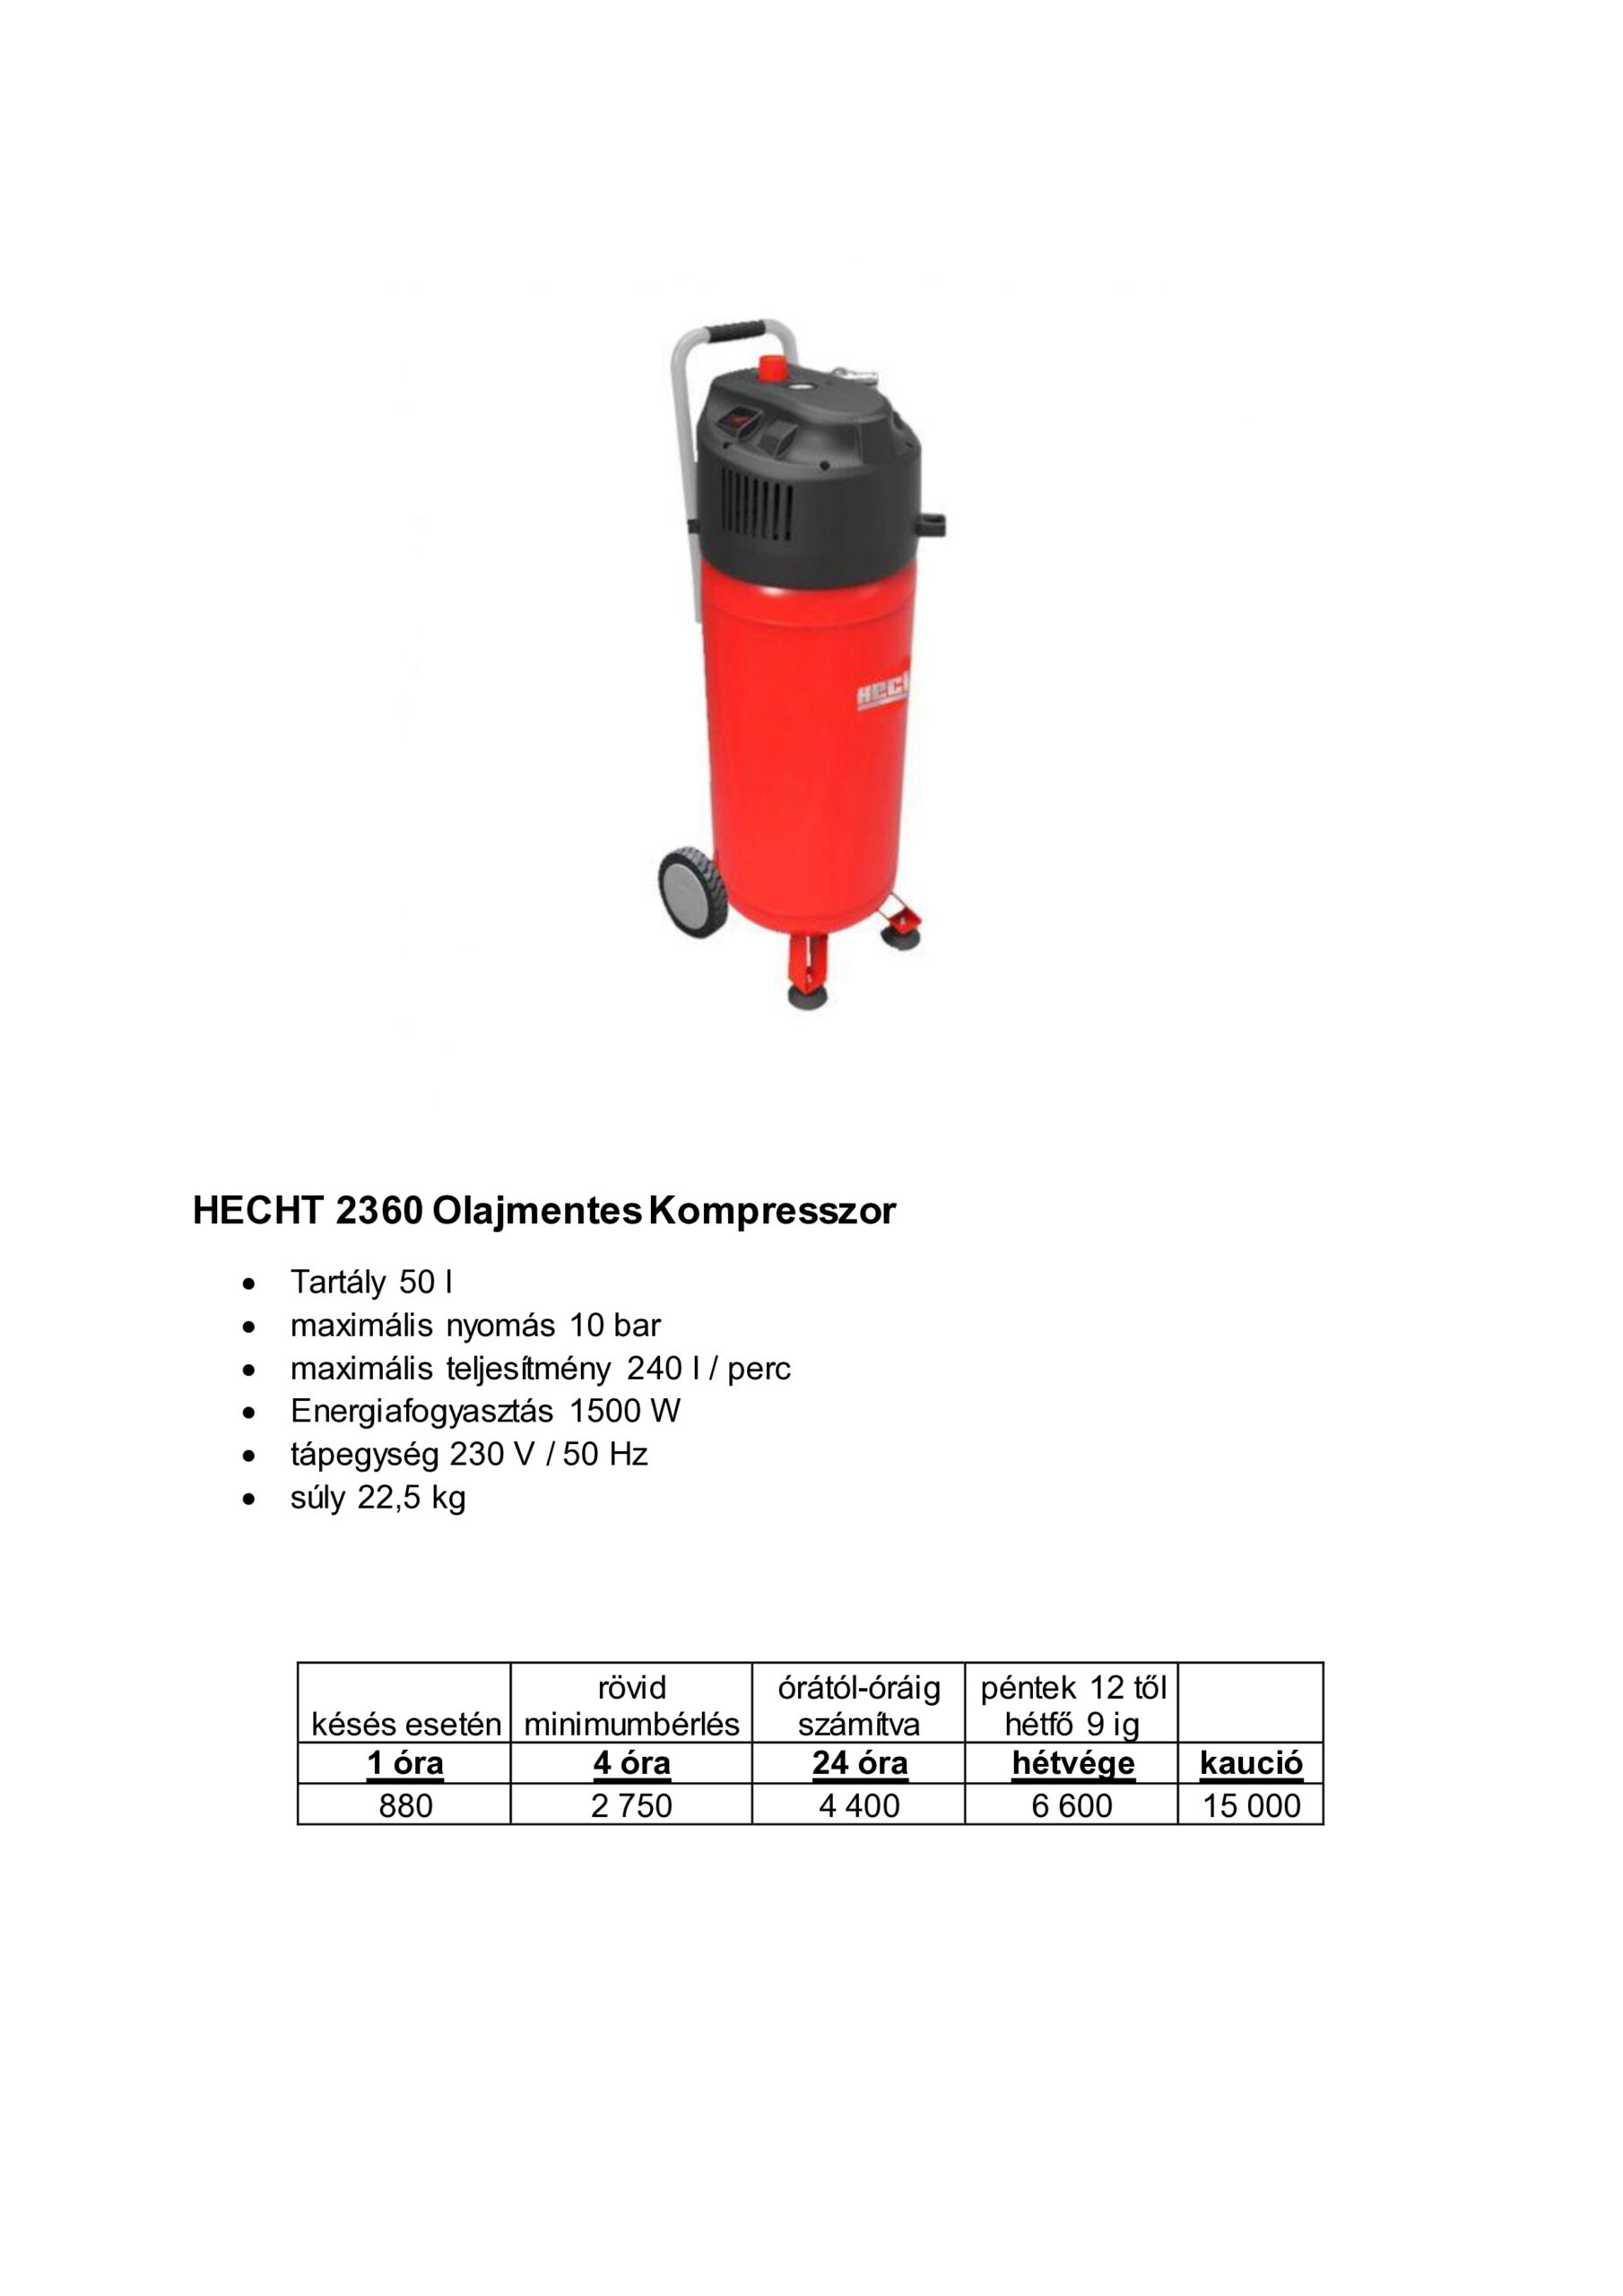 HECHT 2360 Kompresszor